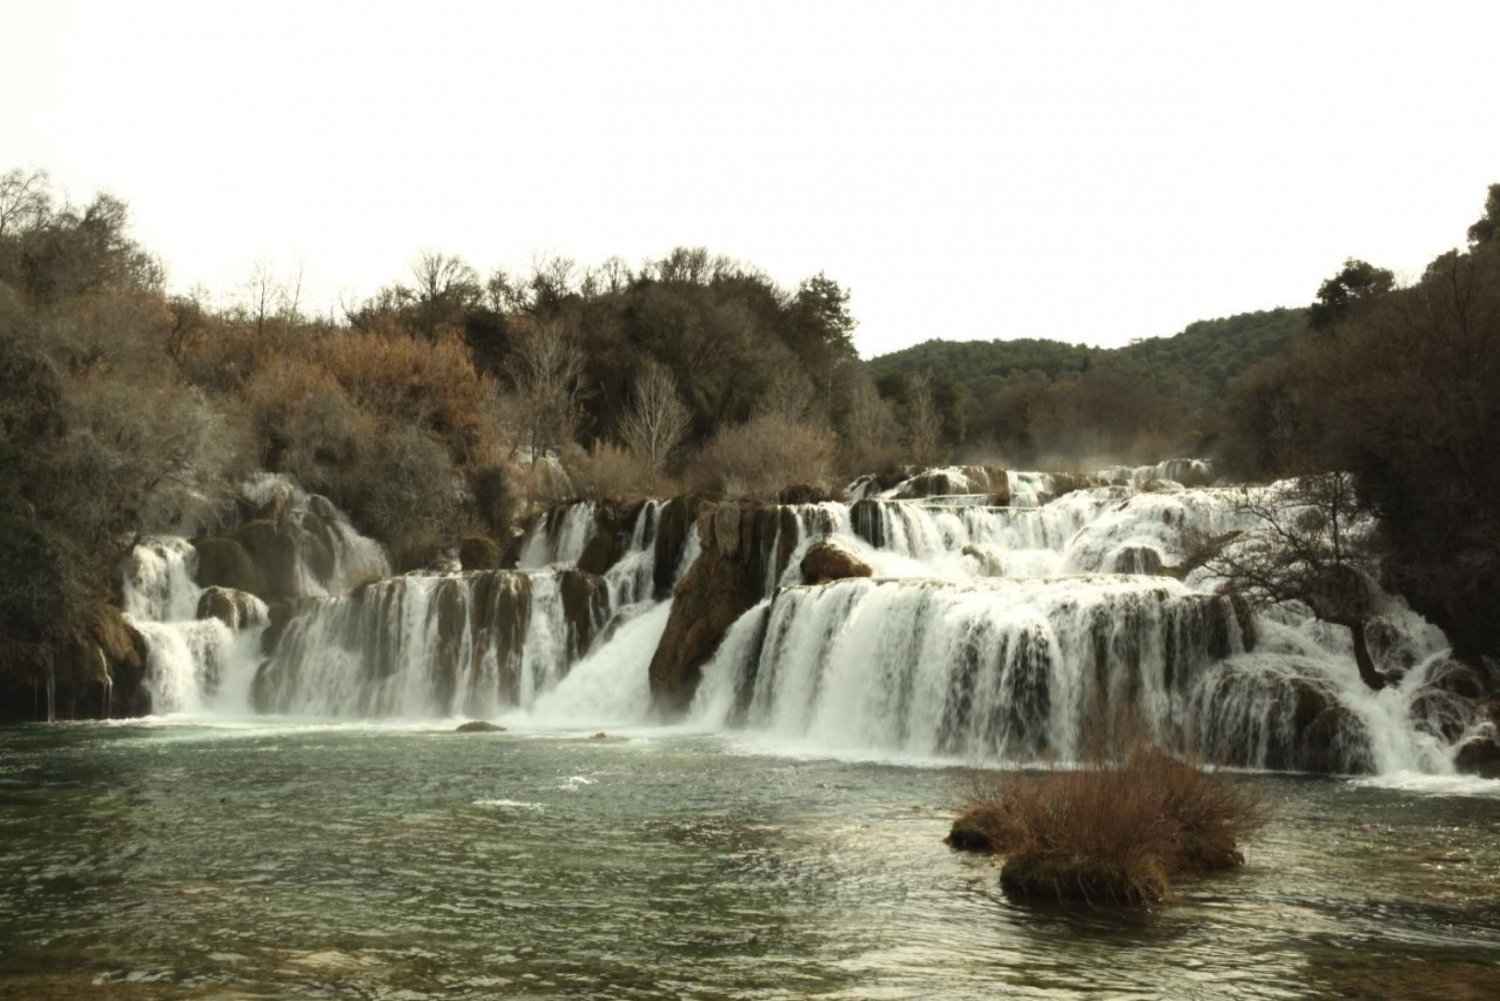 Zadar: Krka Waterfalls, Food & Wine Tasting, & Old Town Tour